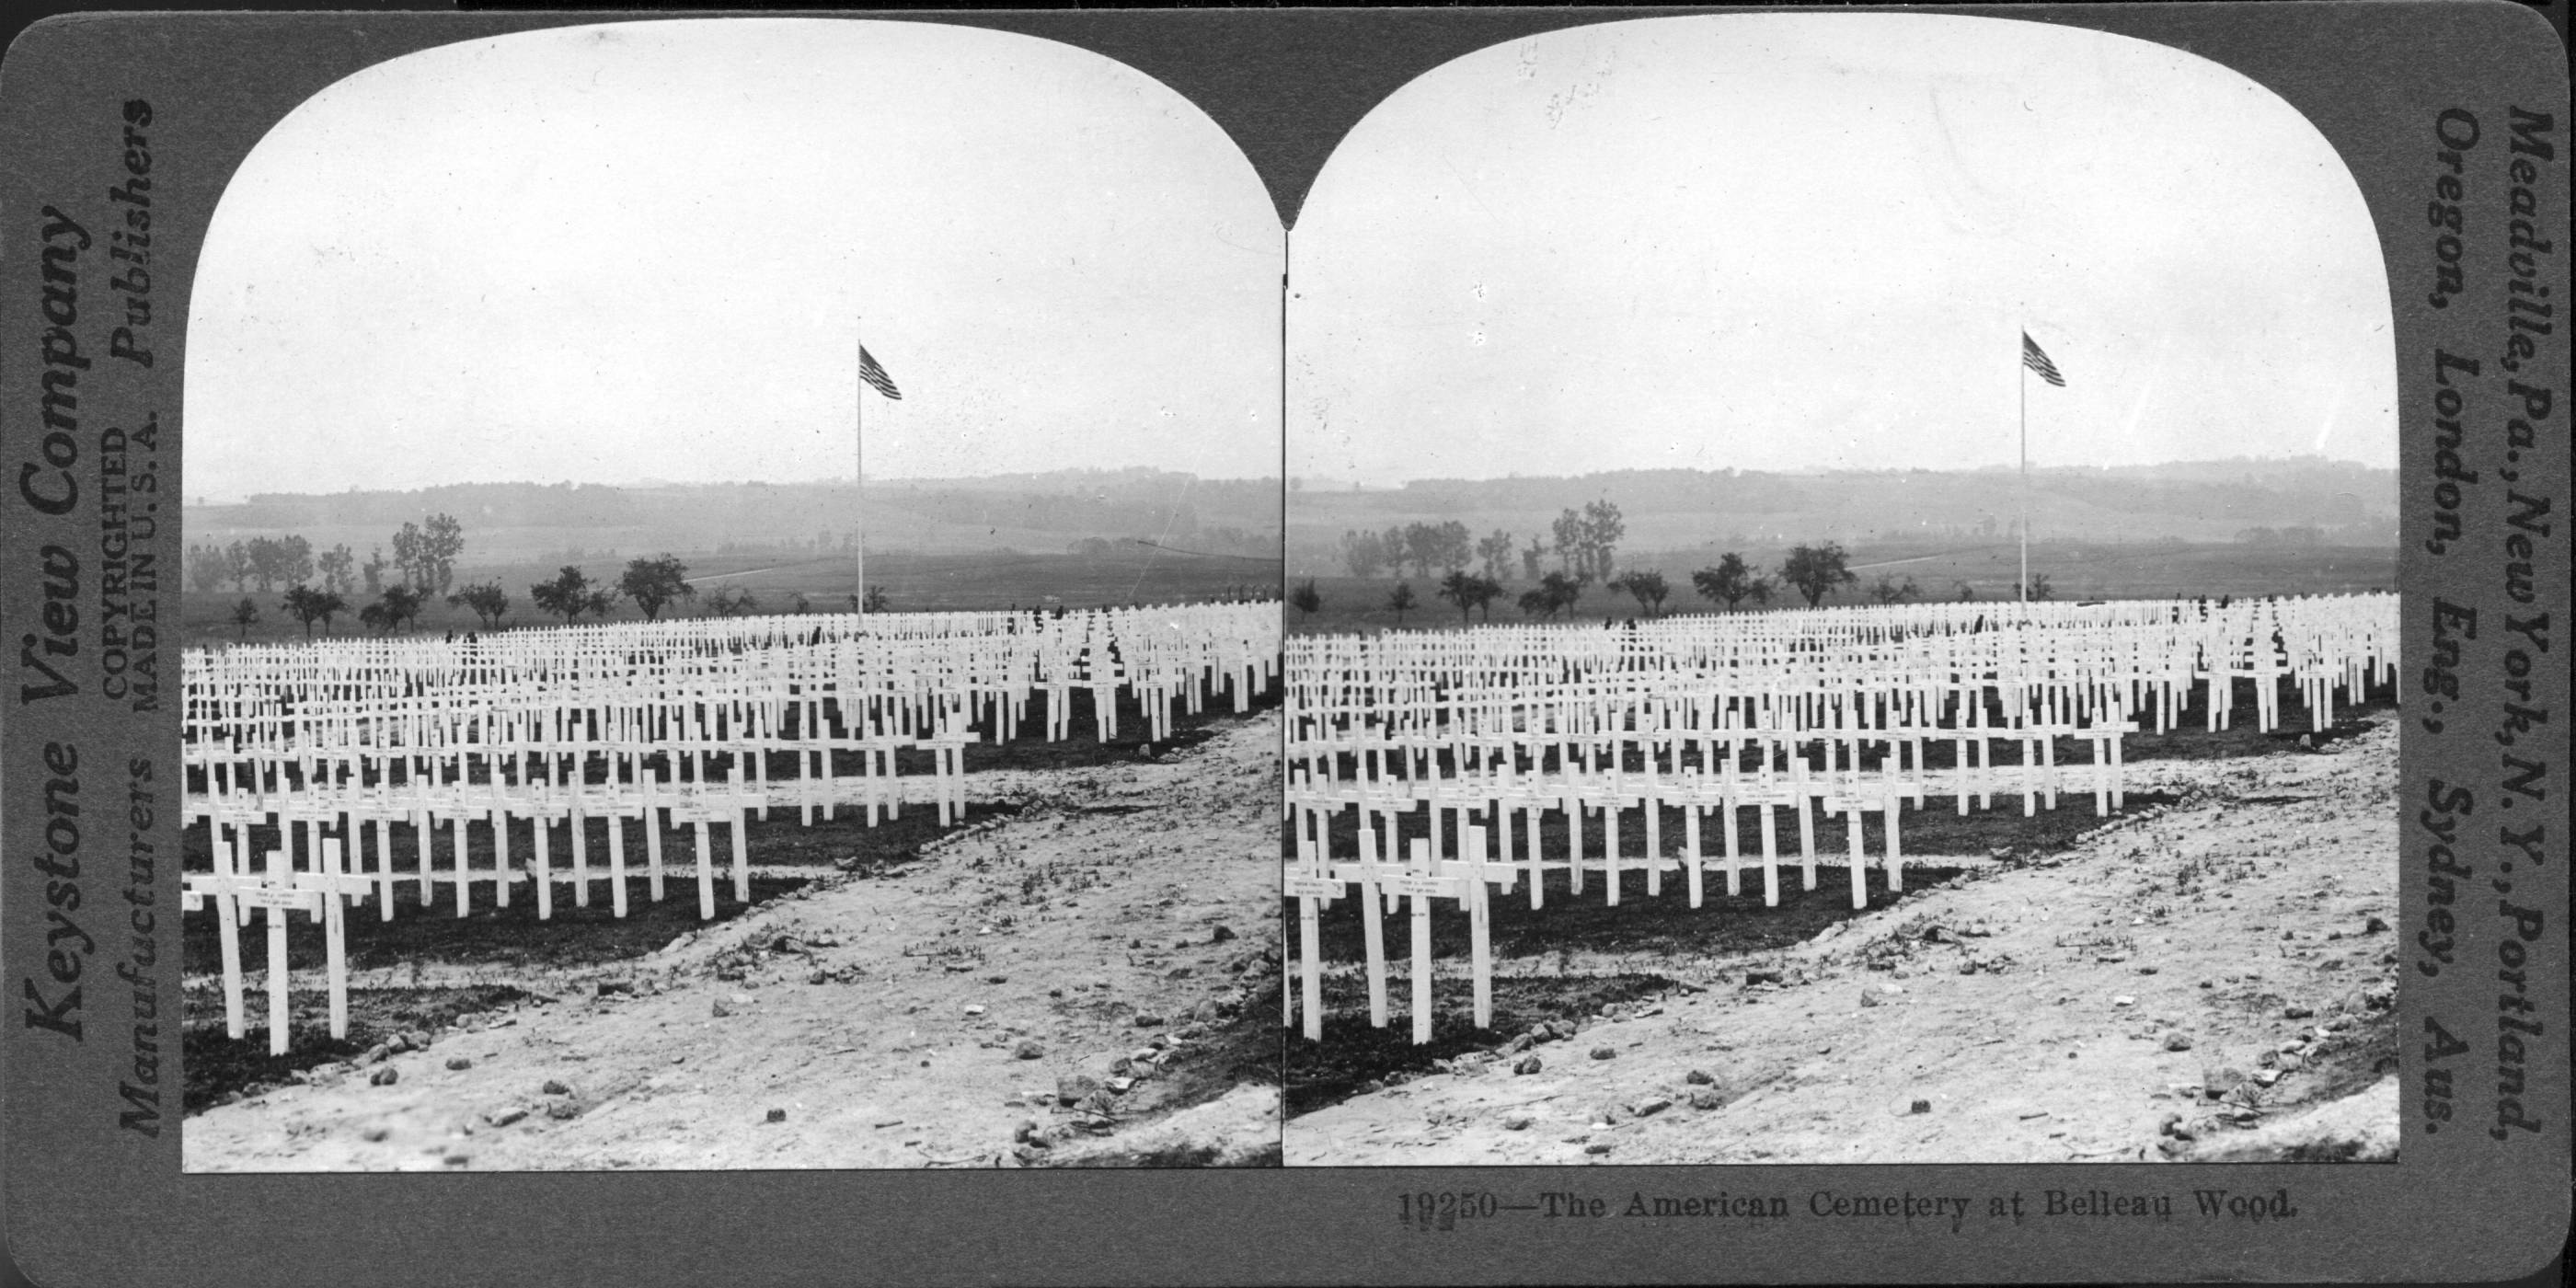 The American Cemetery at Belleau Wood